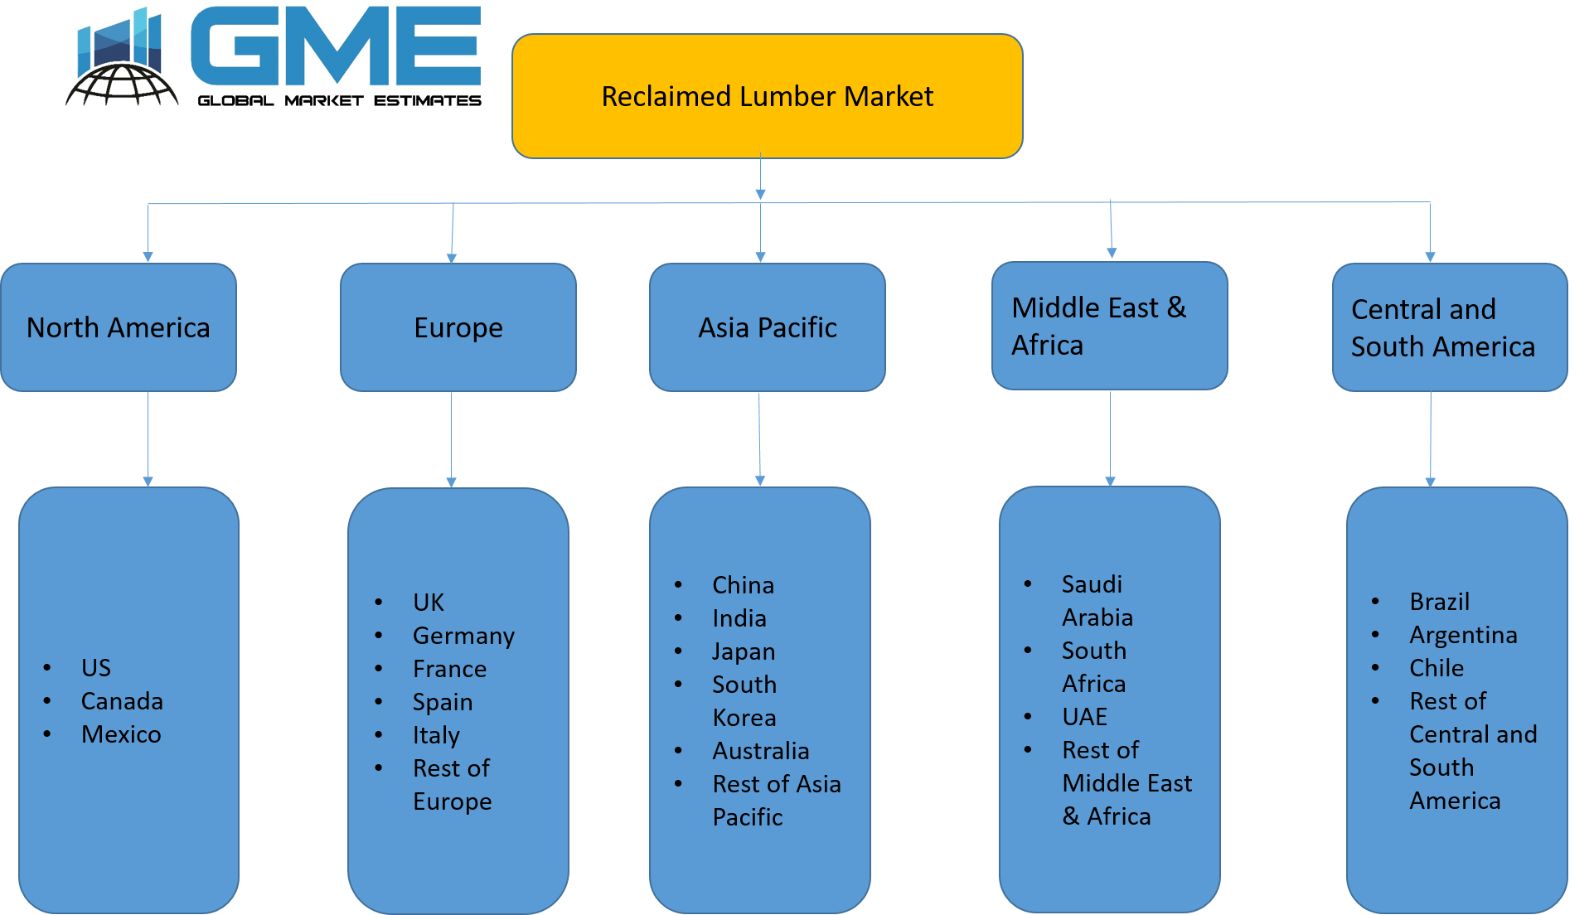 Reclaimed Lumber Market - Regional Analysis